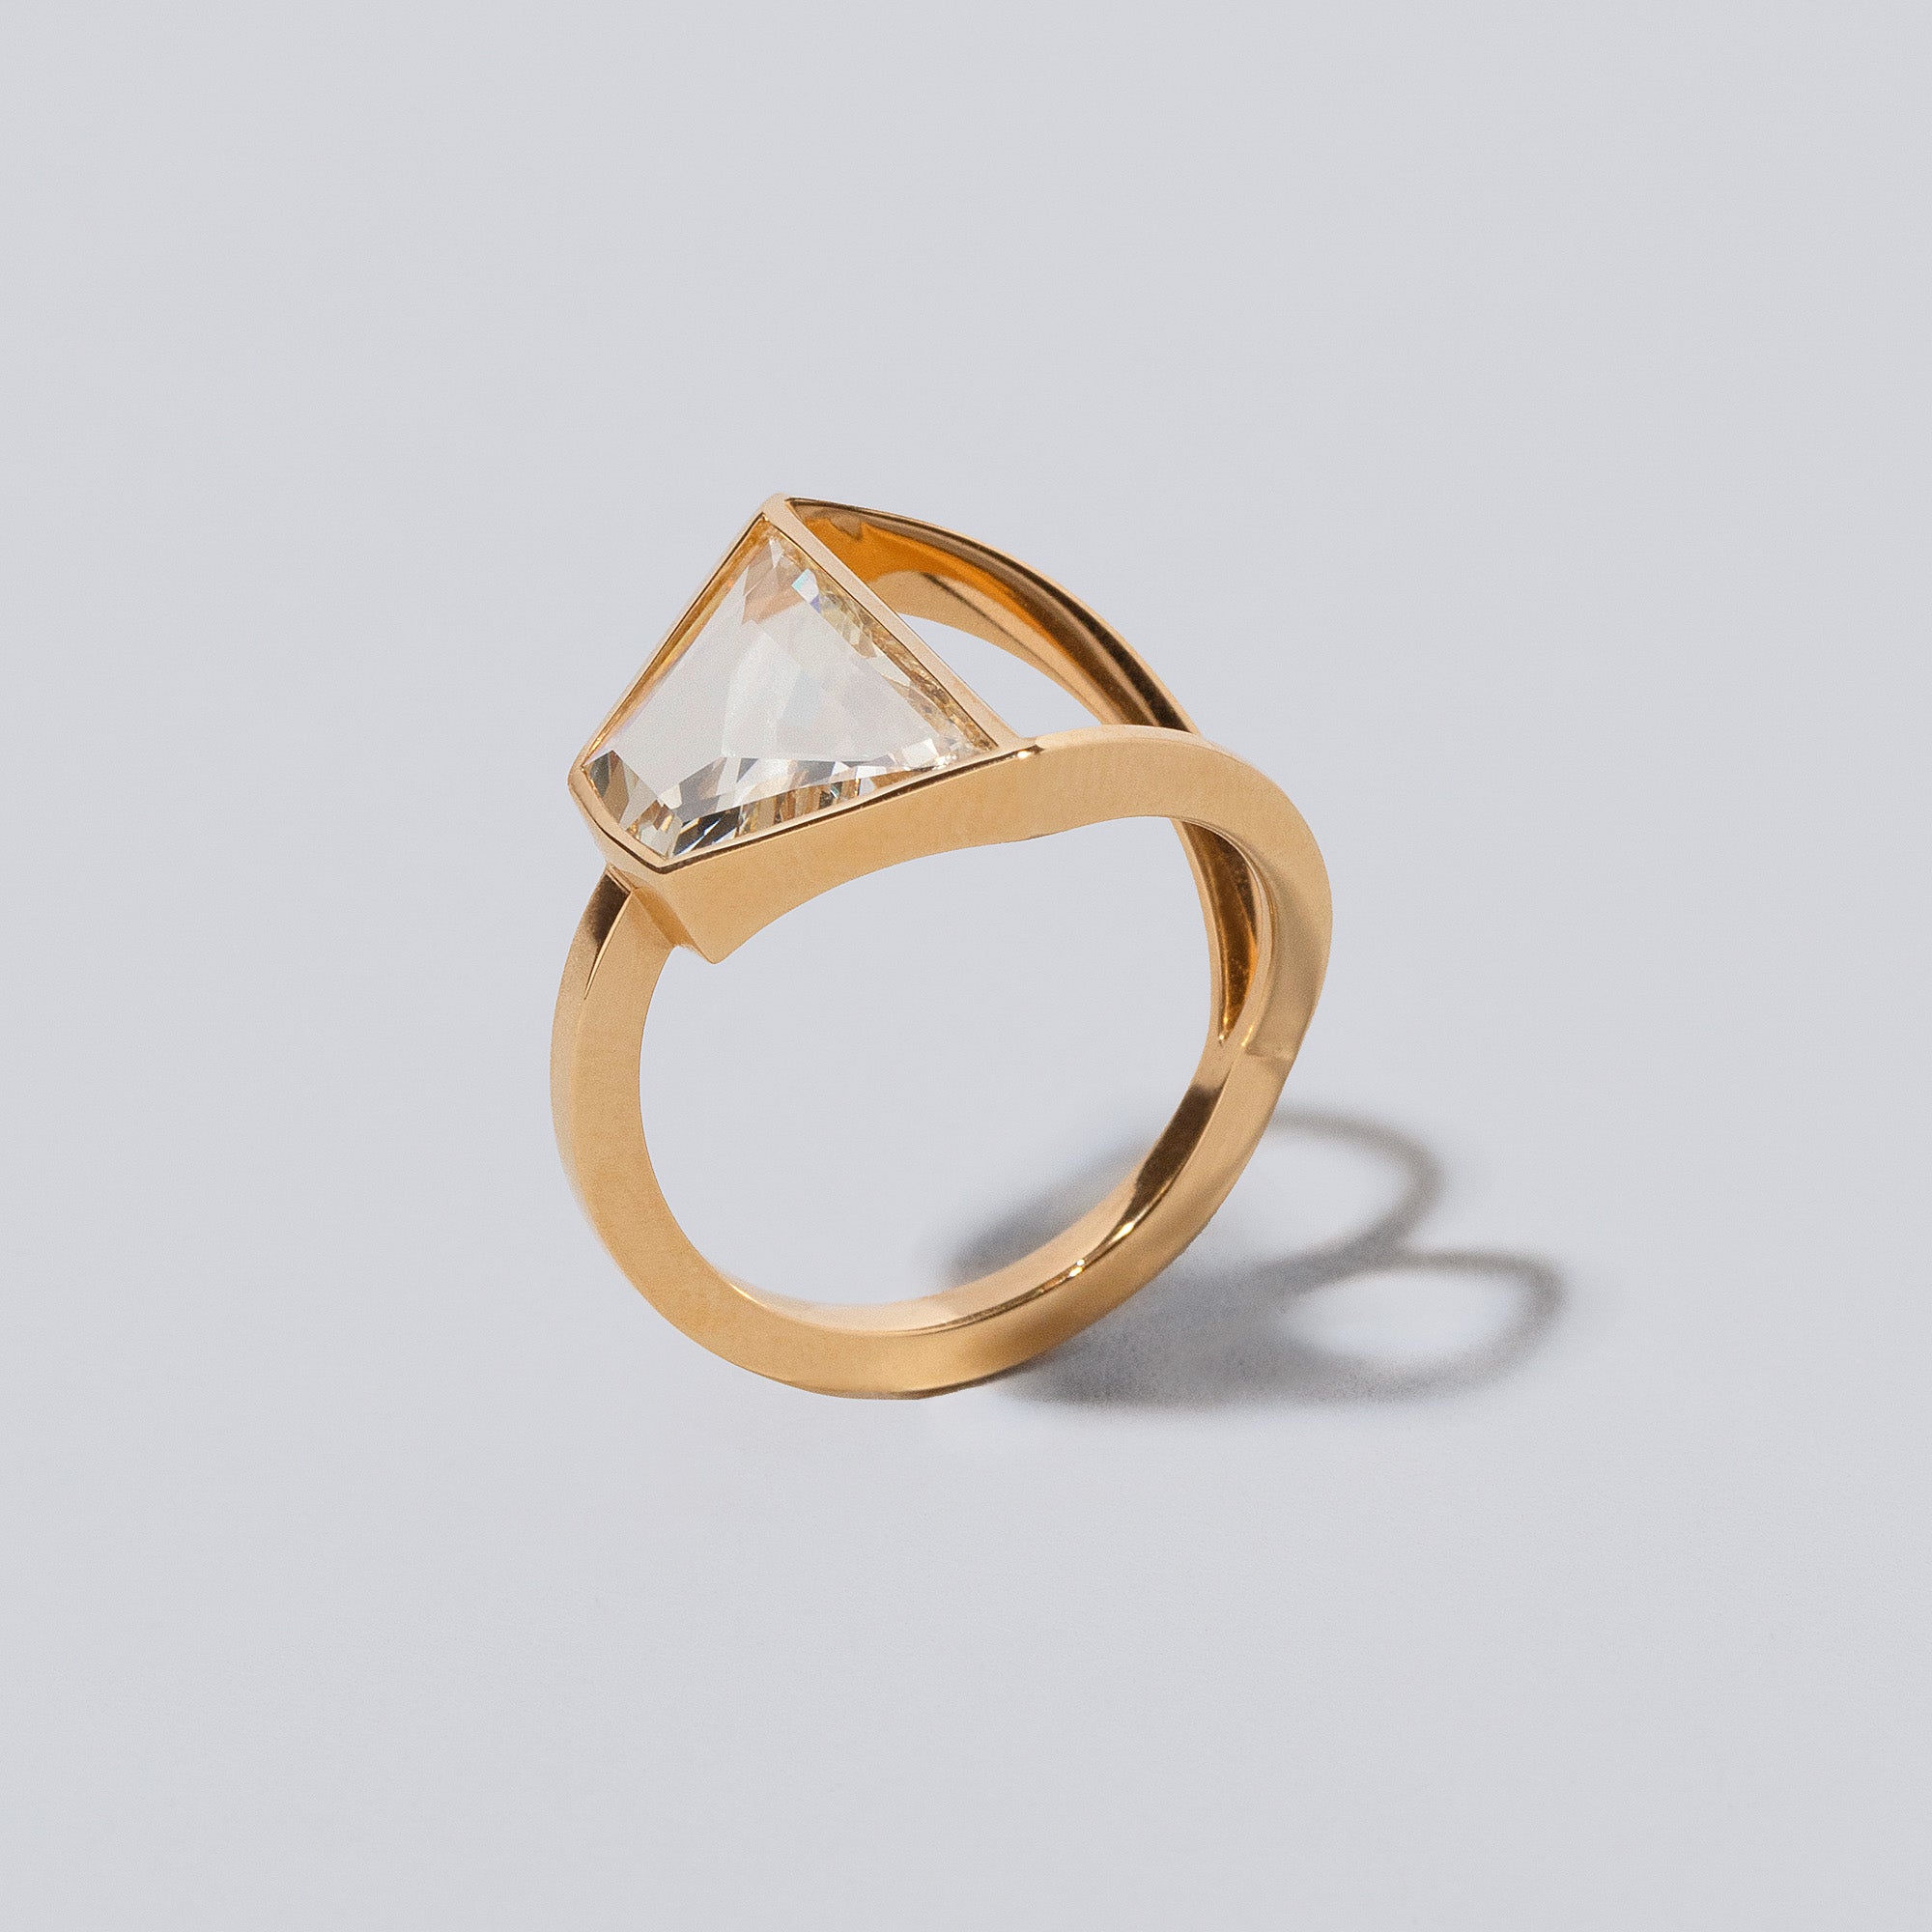 product_details::Cyllene Ring on light color background.